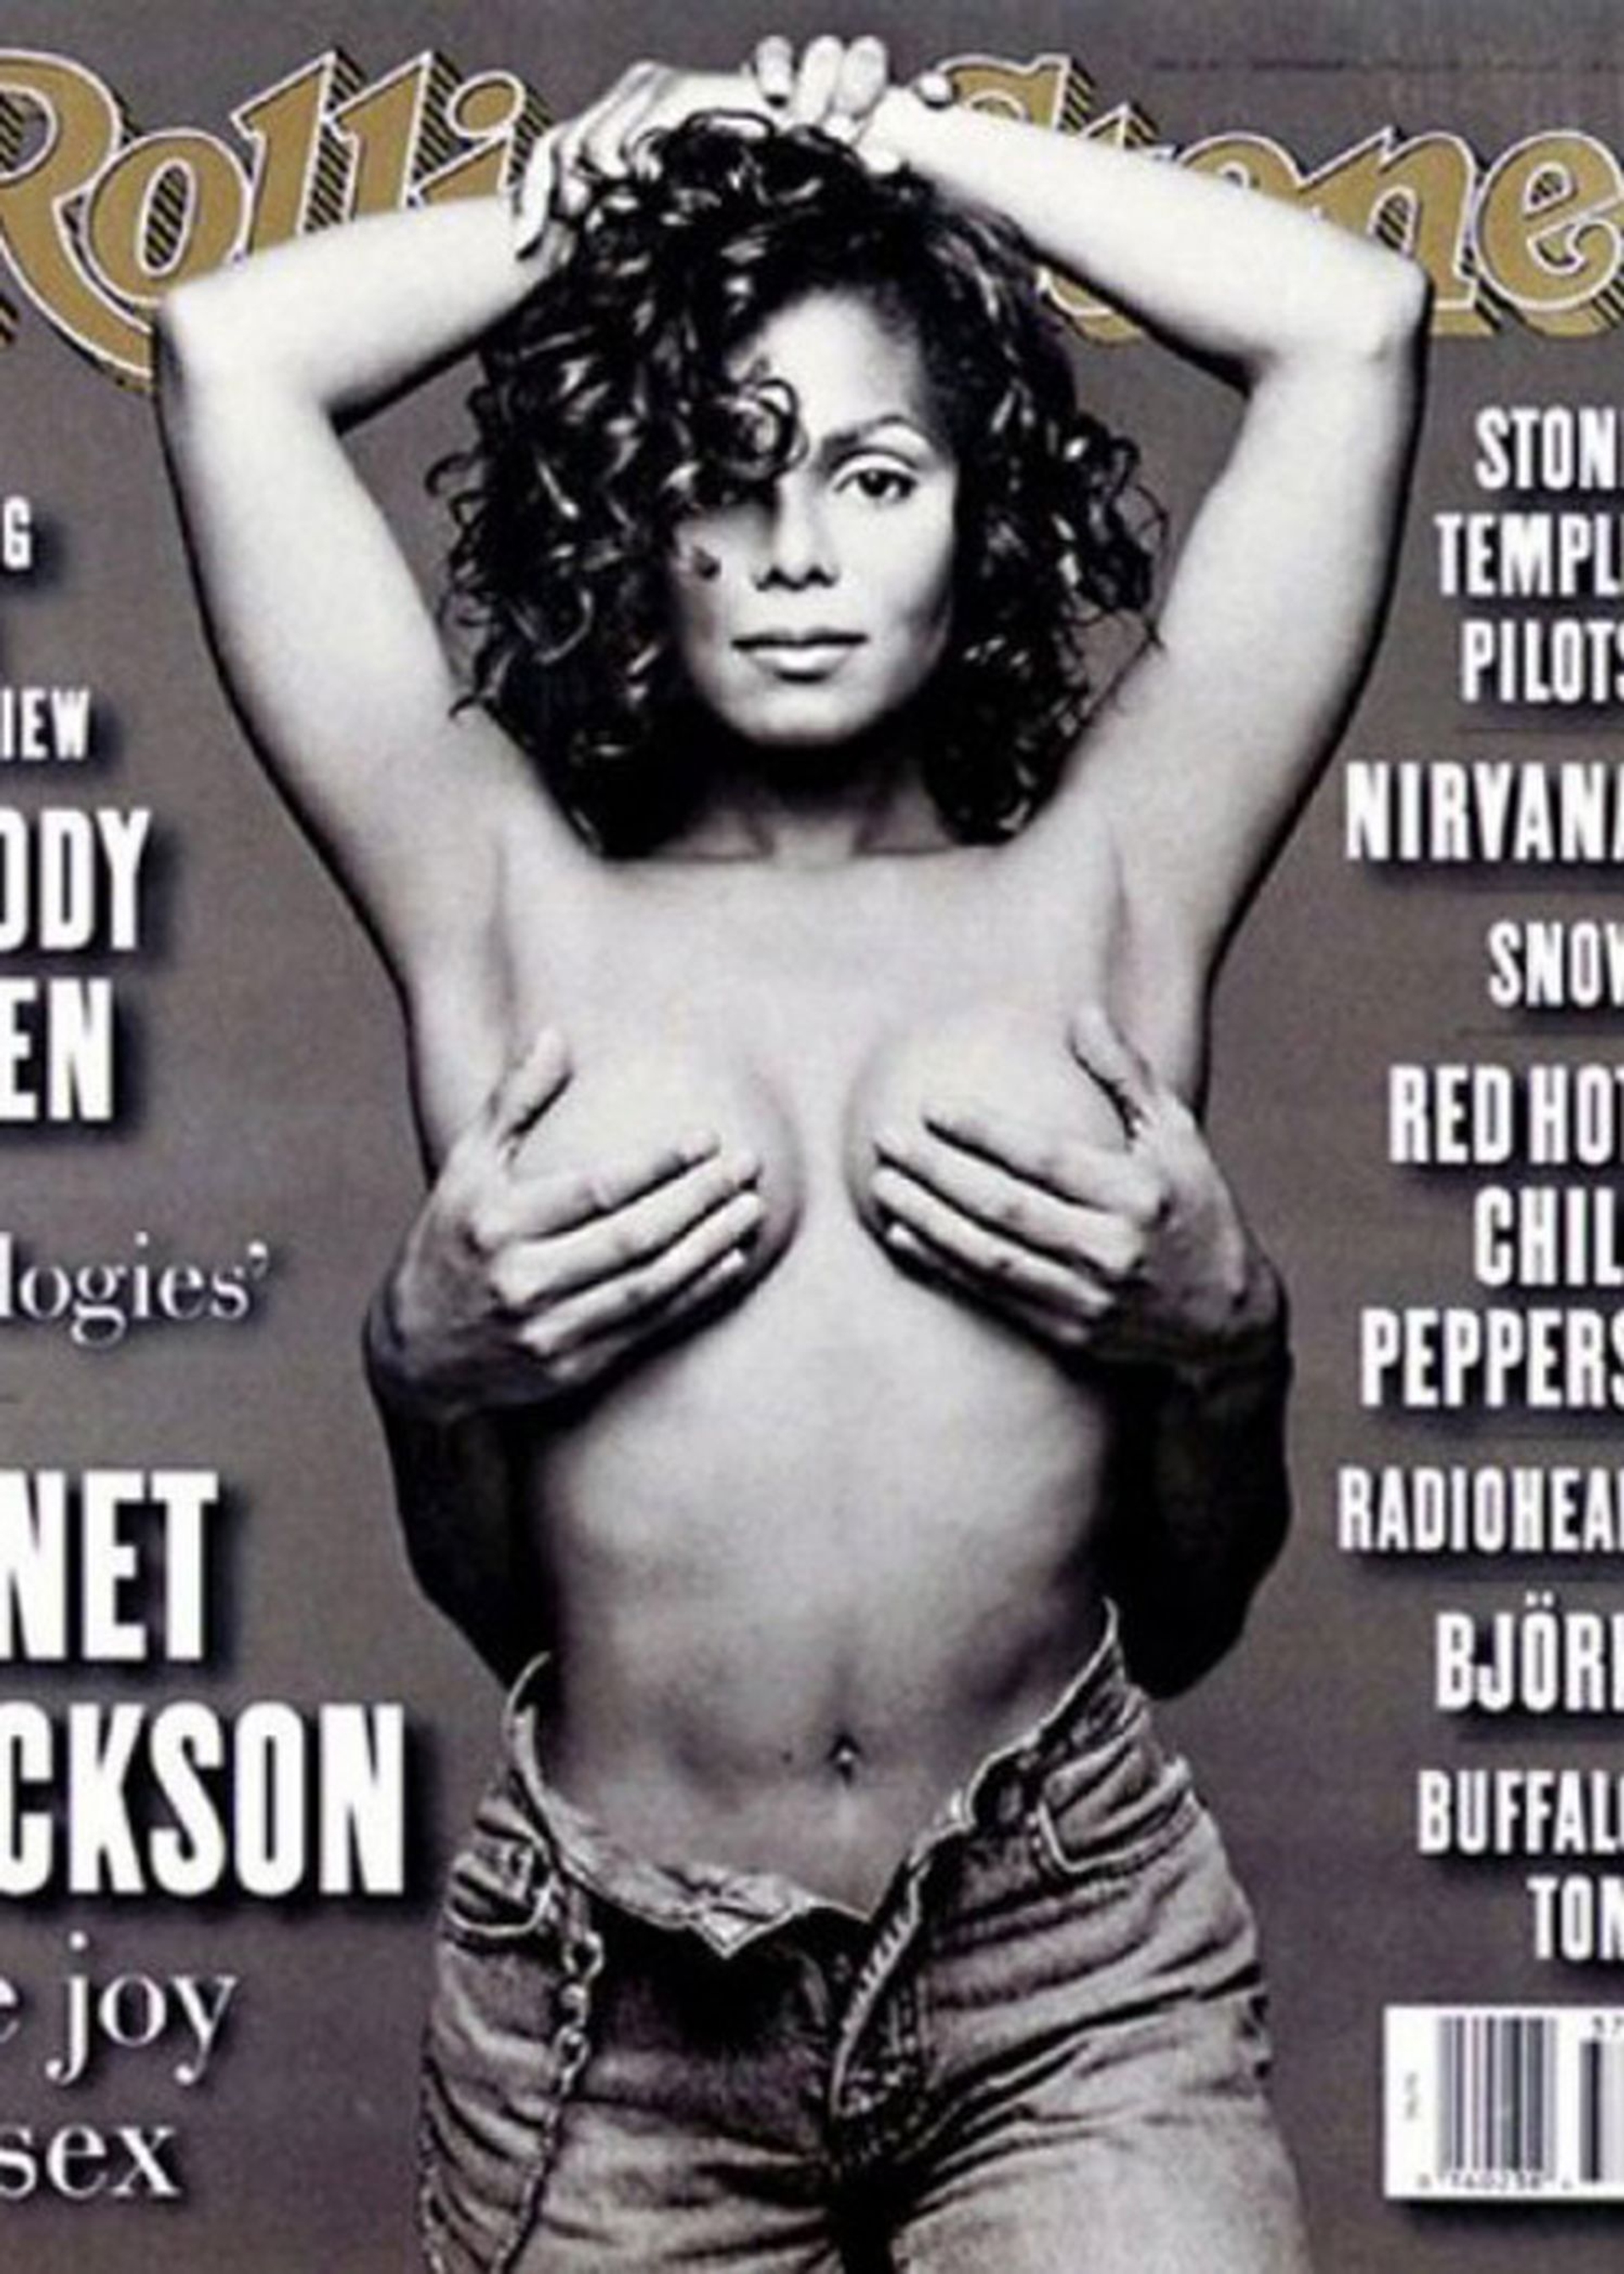 3. Janet Jackson